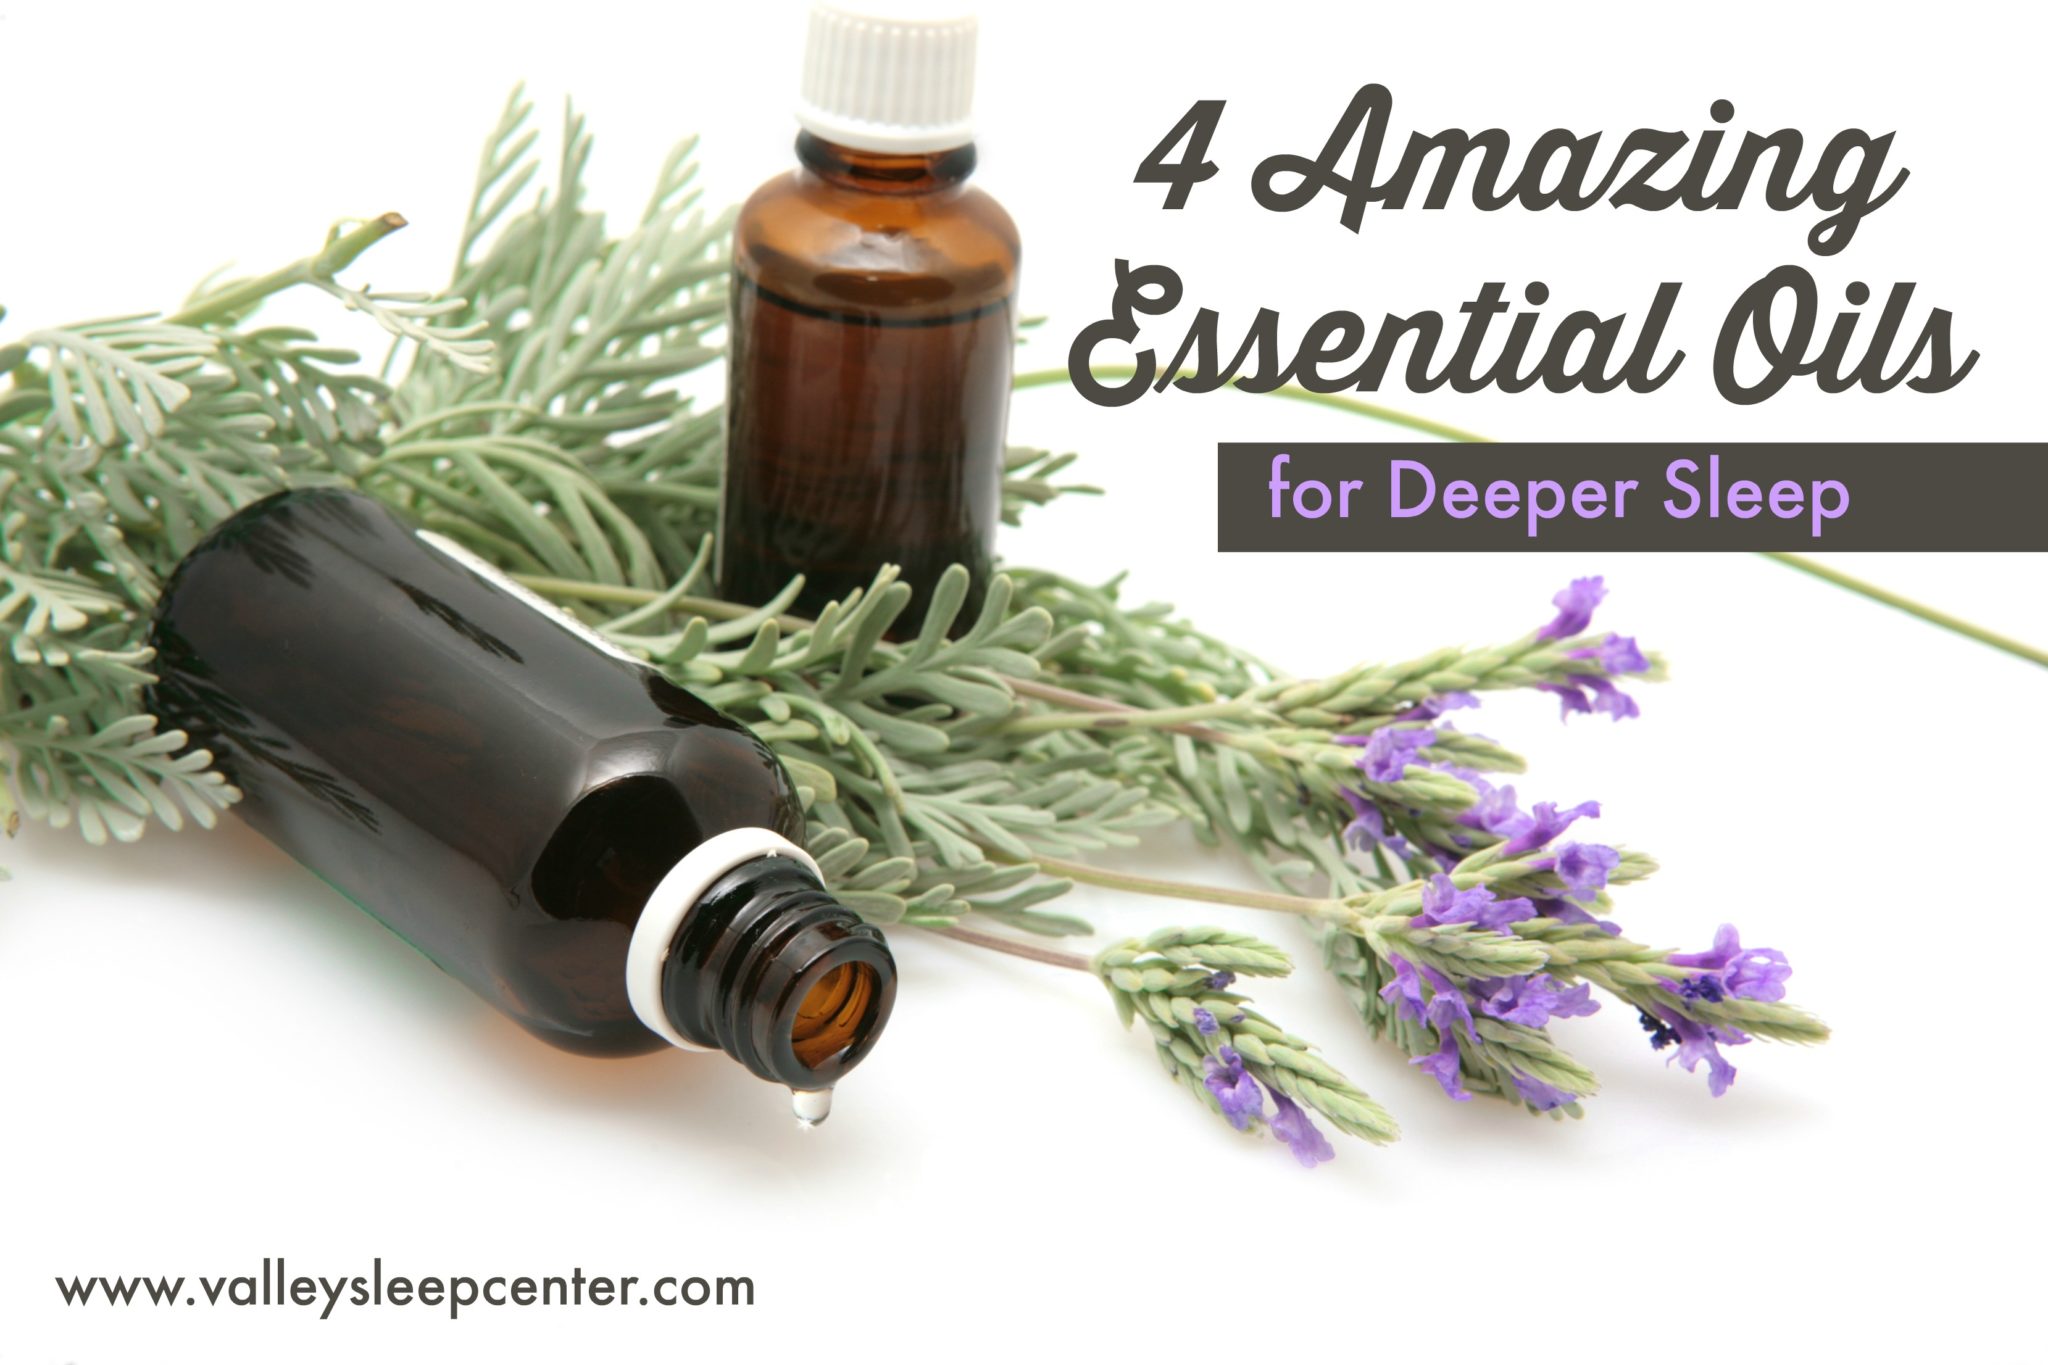 4 amazing essential oils for deeper sleep